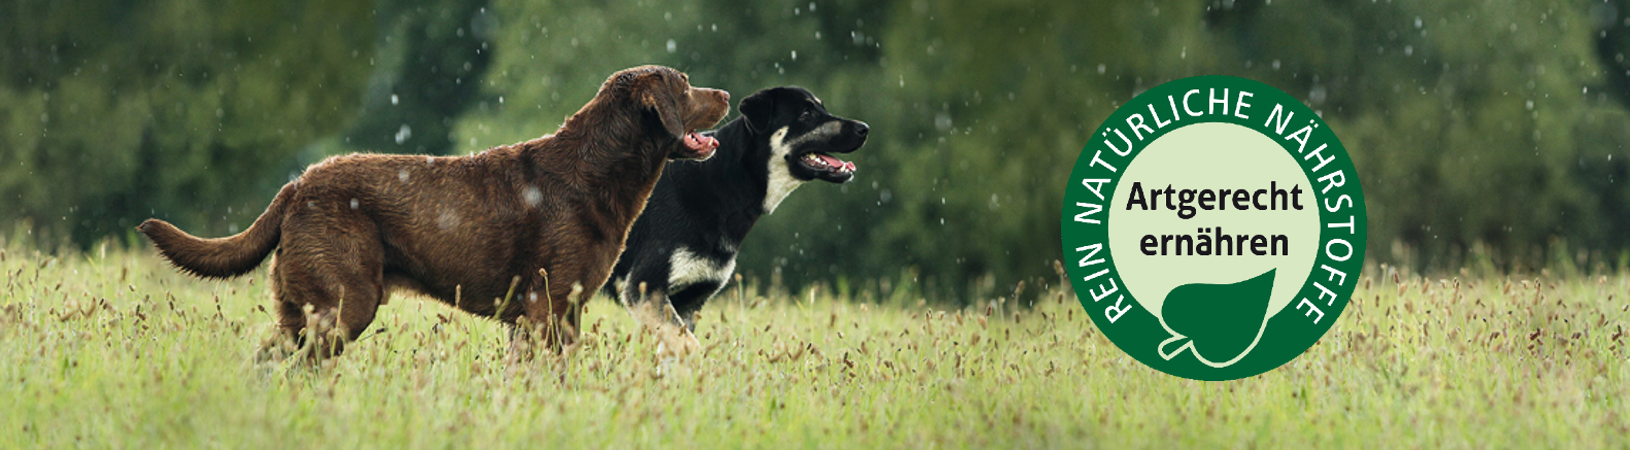 Zwei Hunde und das Artgerecht ernähren Logo